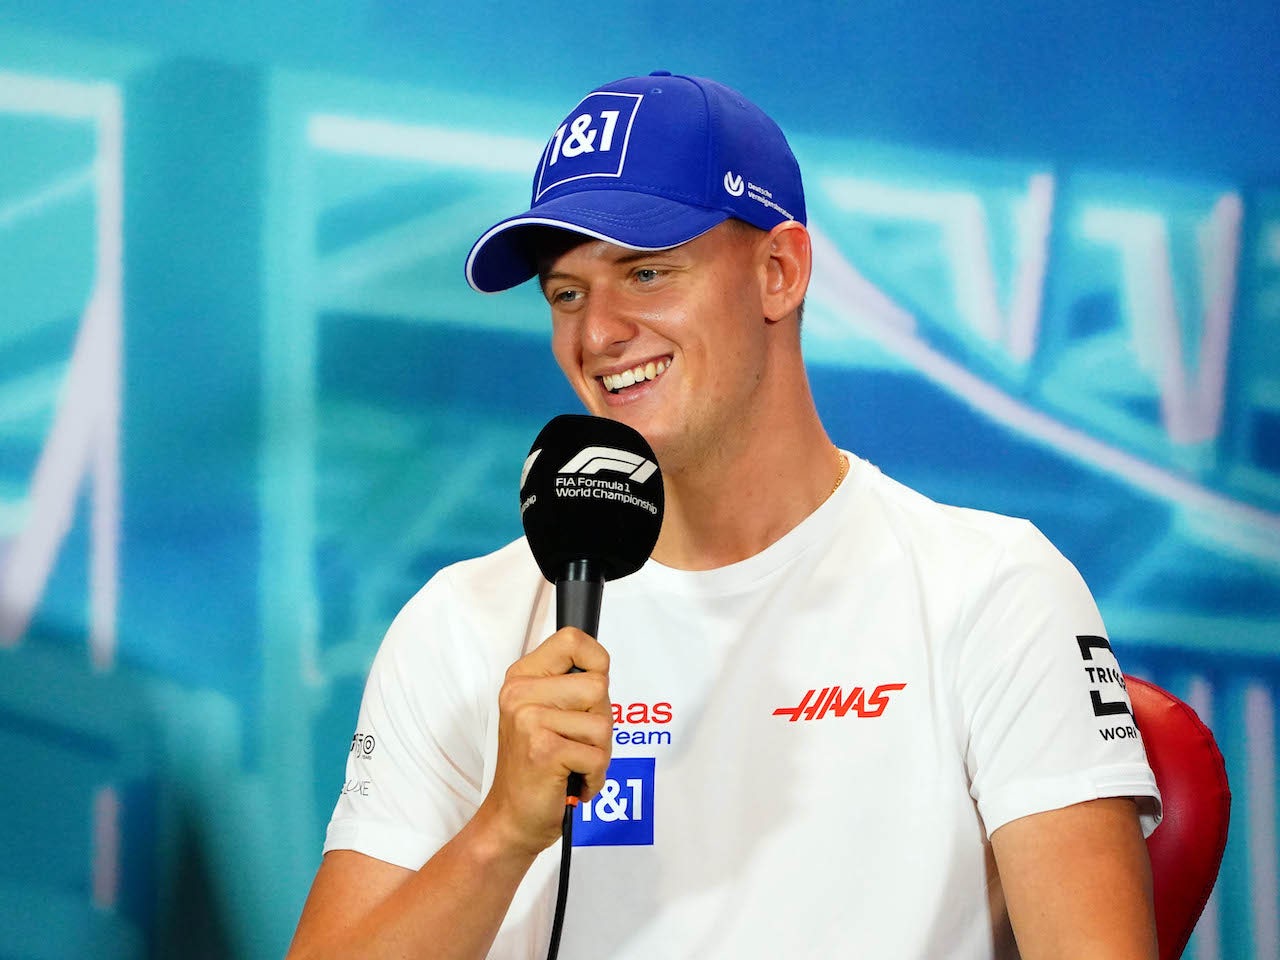 No 'big step' from Schumacher in 2022 - boss